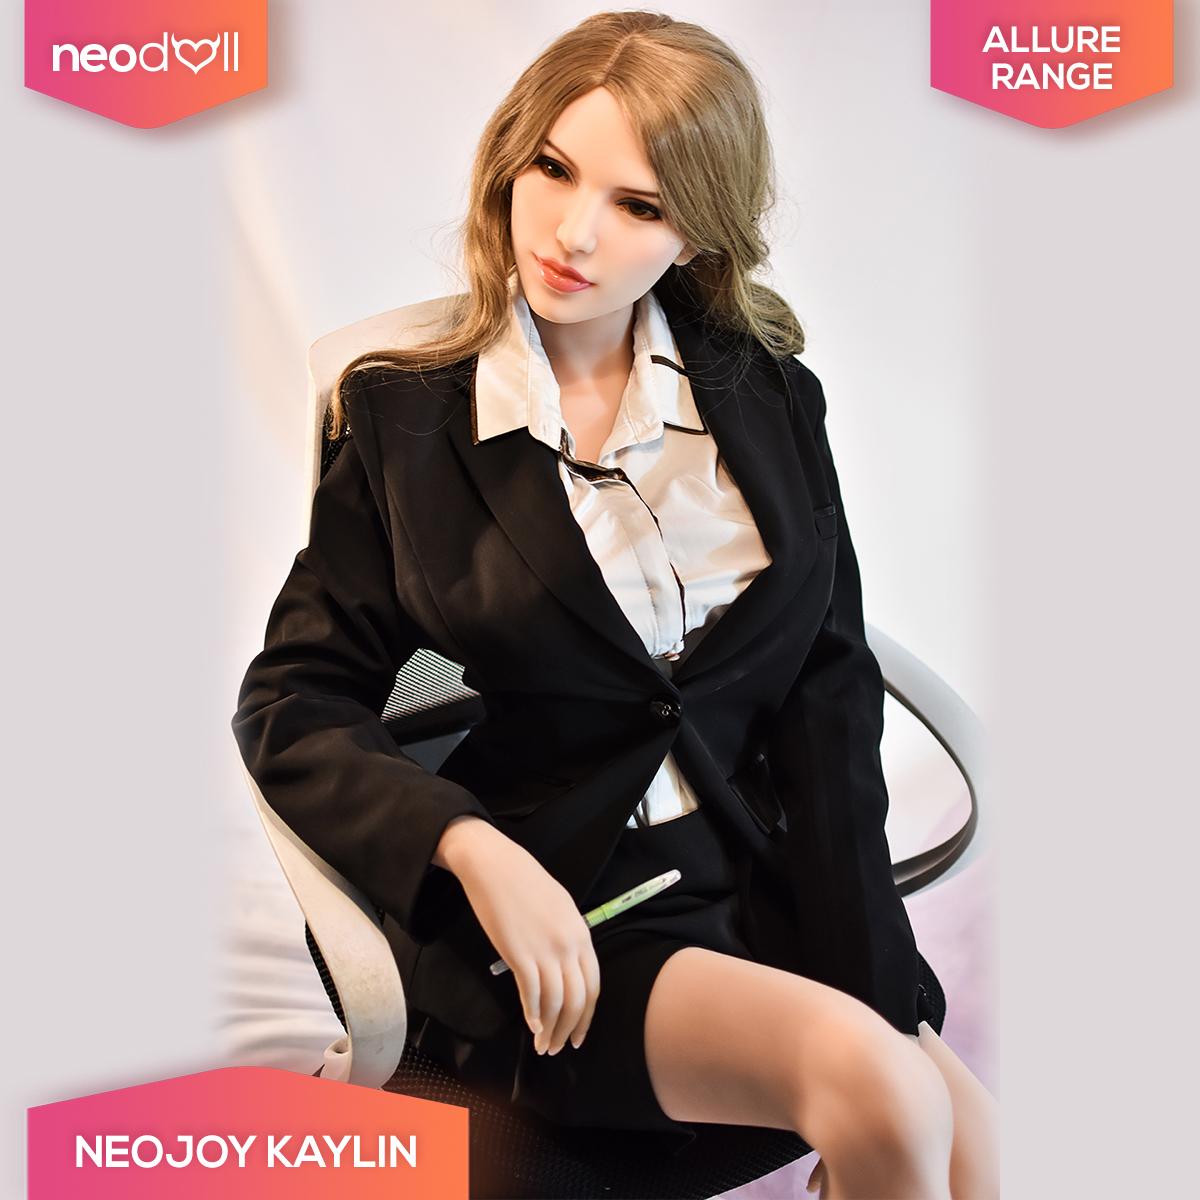 Neodoll Allure Kaylin - Realistic Sex Doll - 165cm - Natural